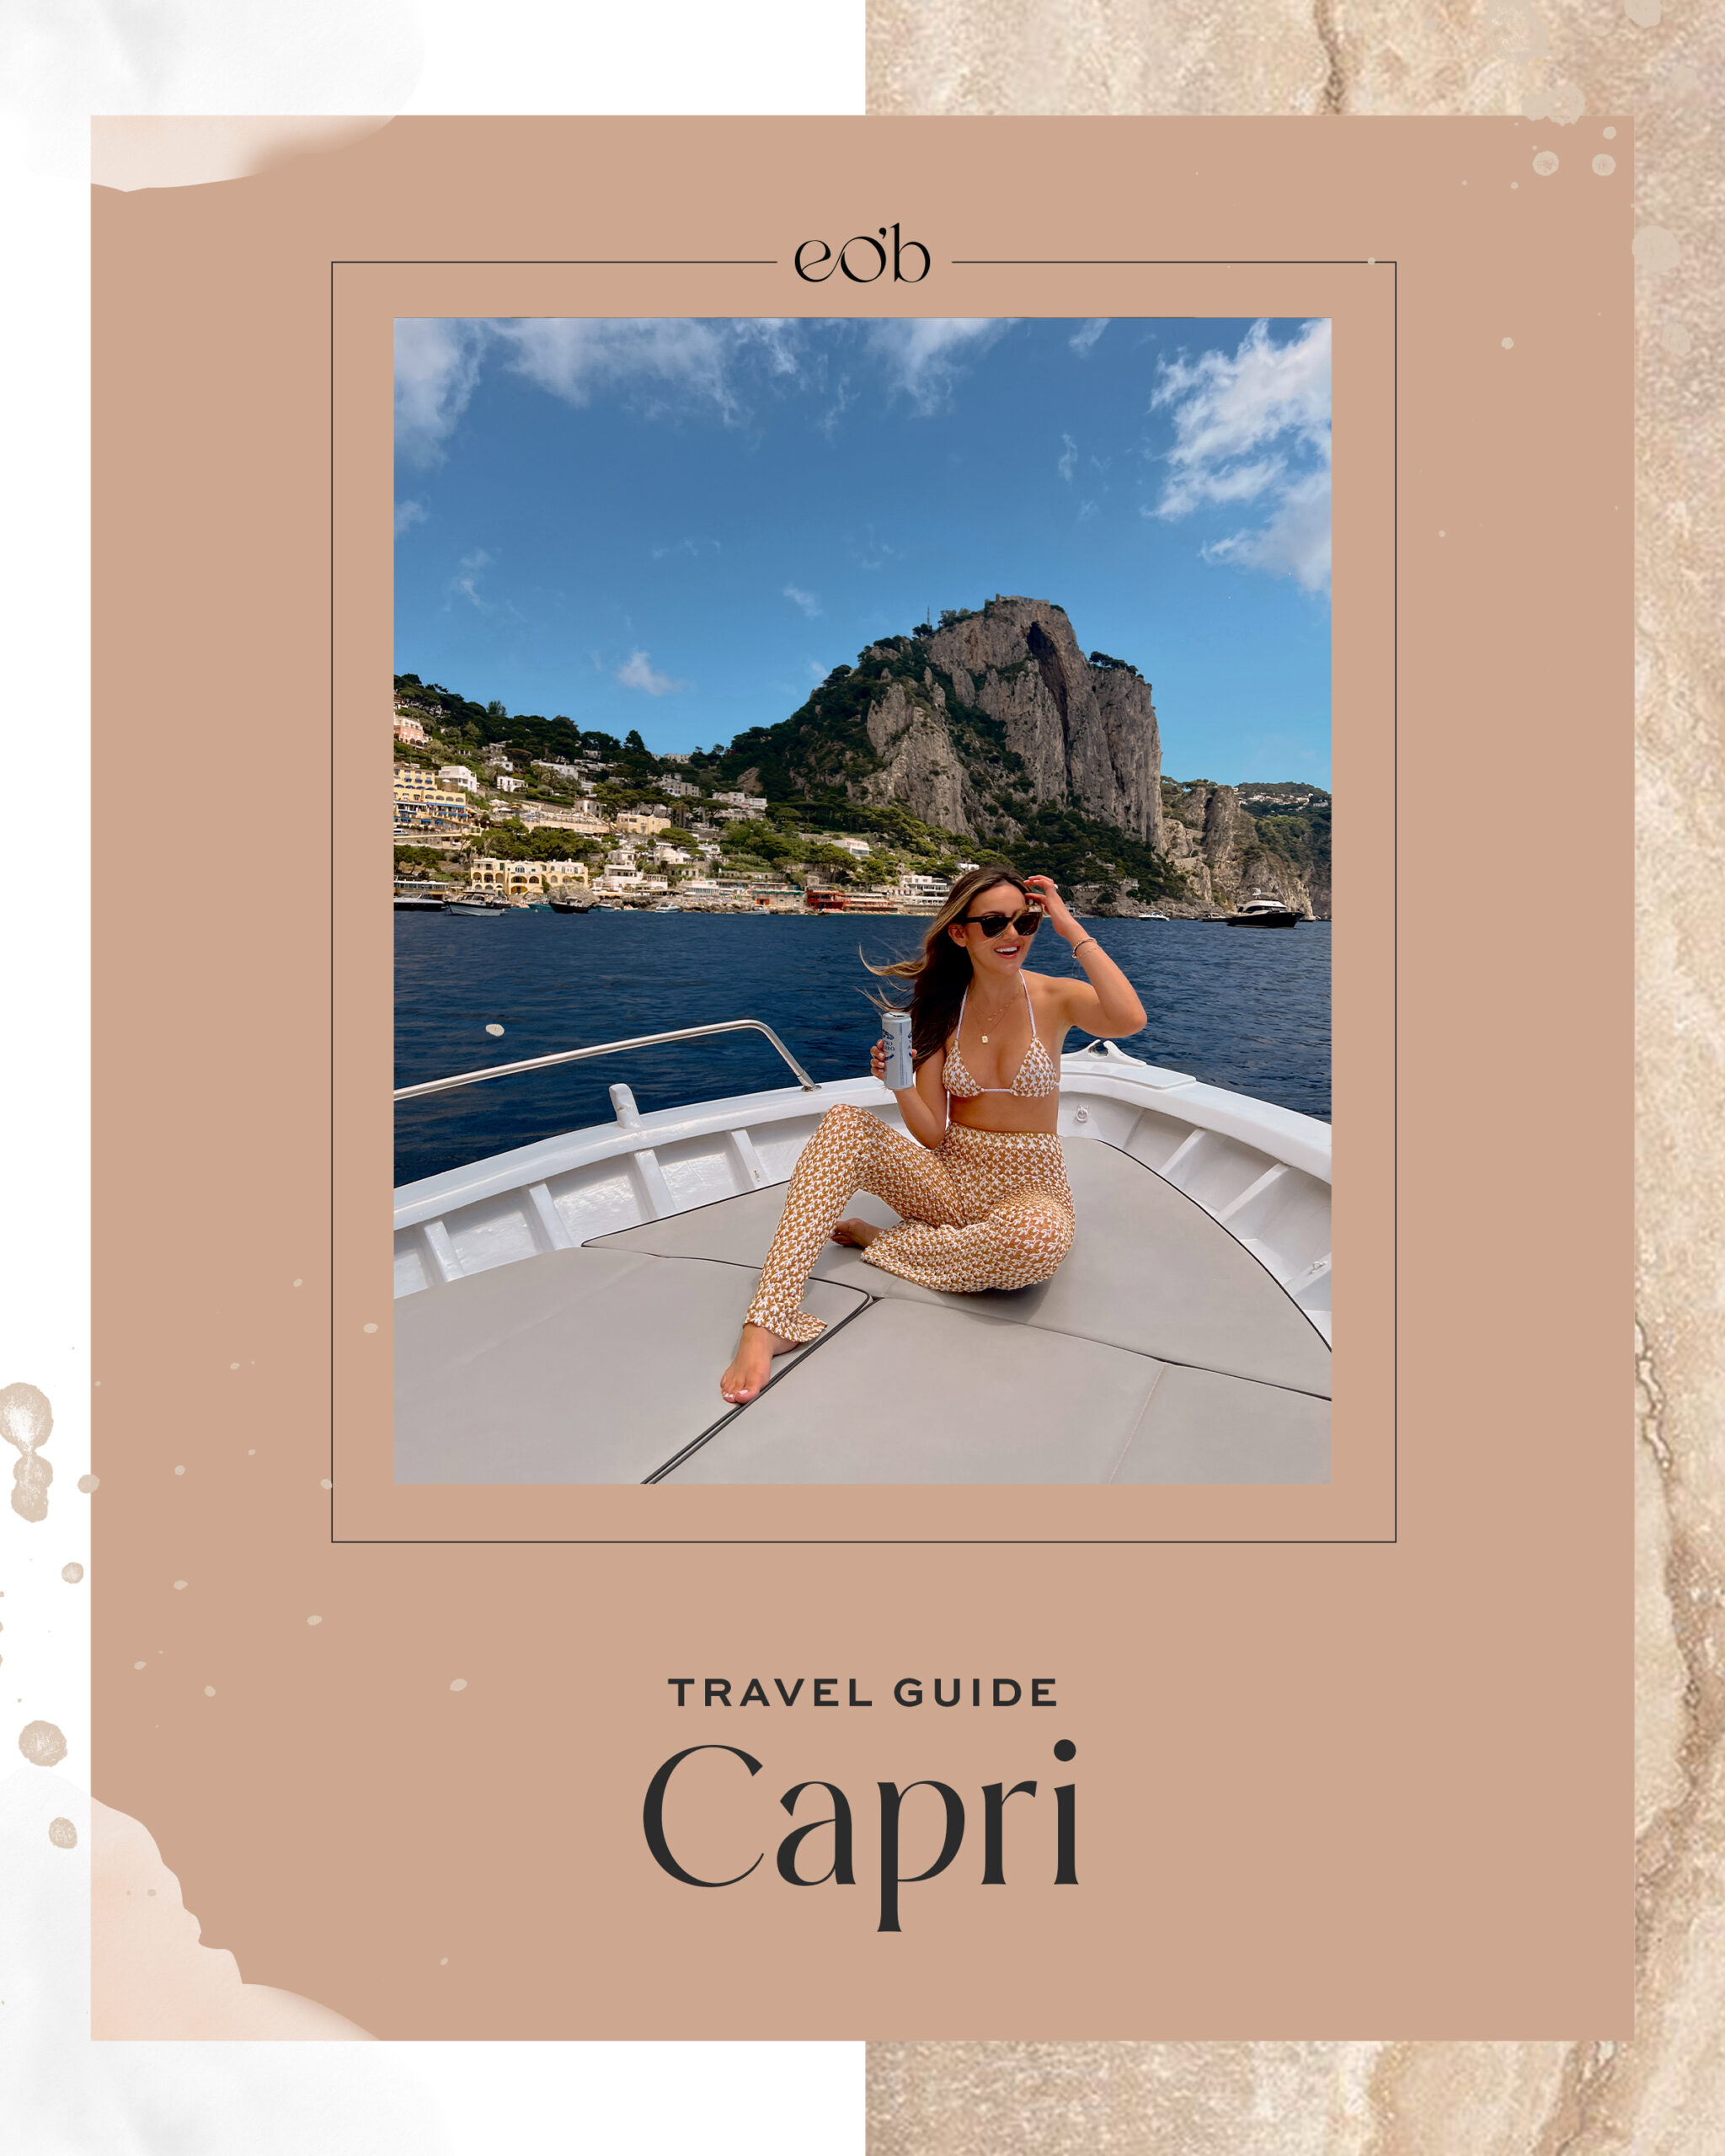 Capri italy travel guide for boat tour in amalfi coast island